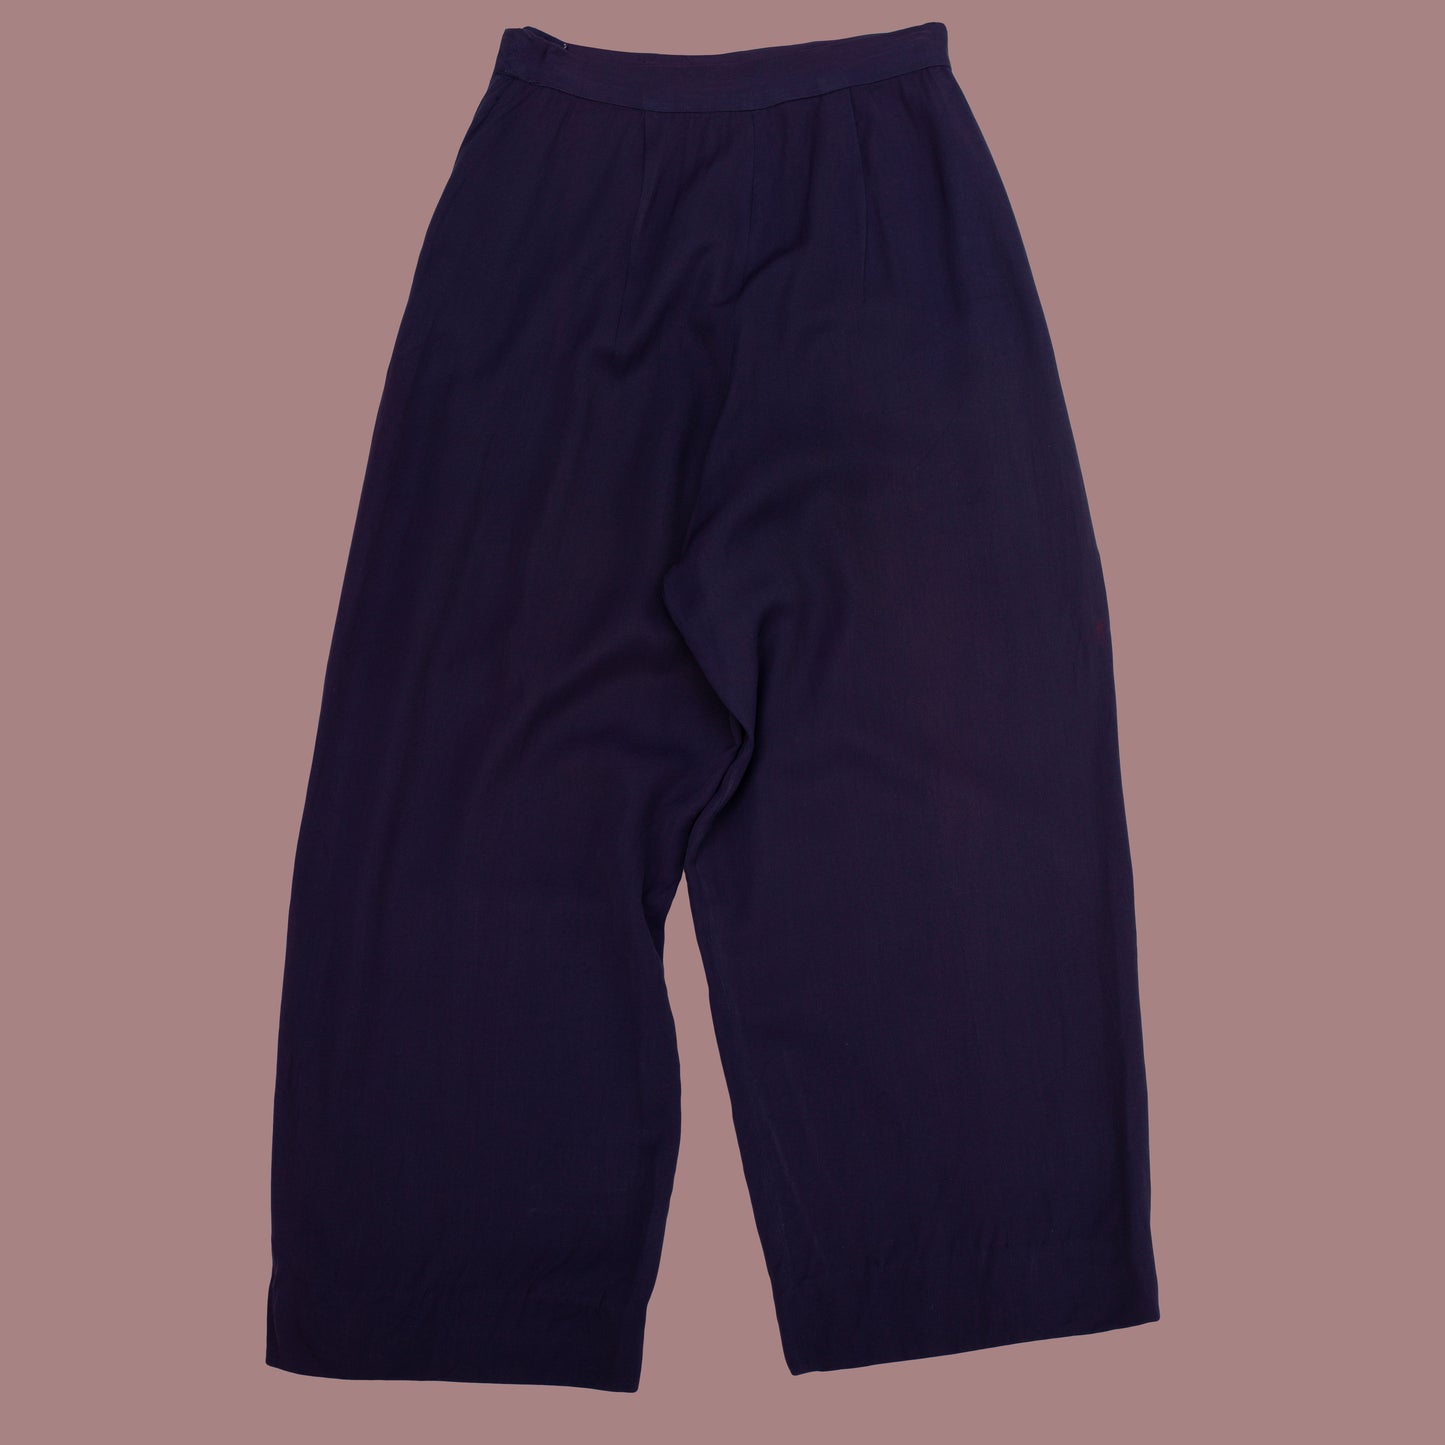 Vintage 1940s Navy Blue Rayon Pants 25 Waist